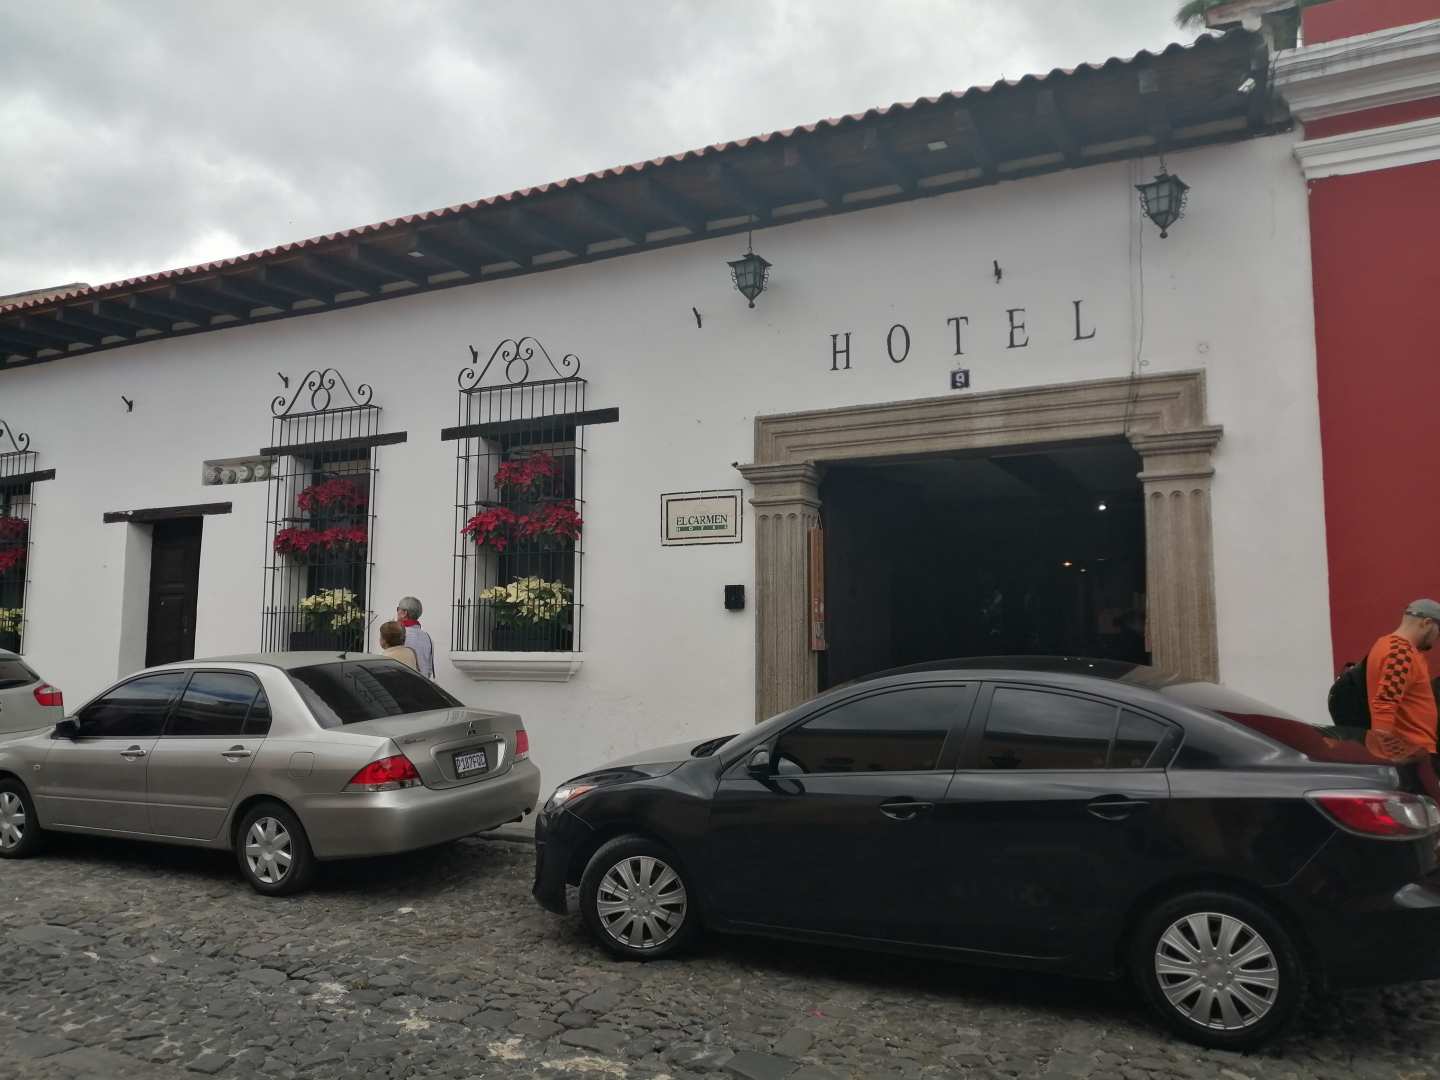 Hotel El Carmen